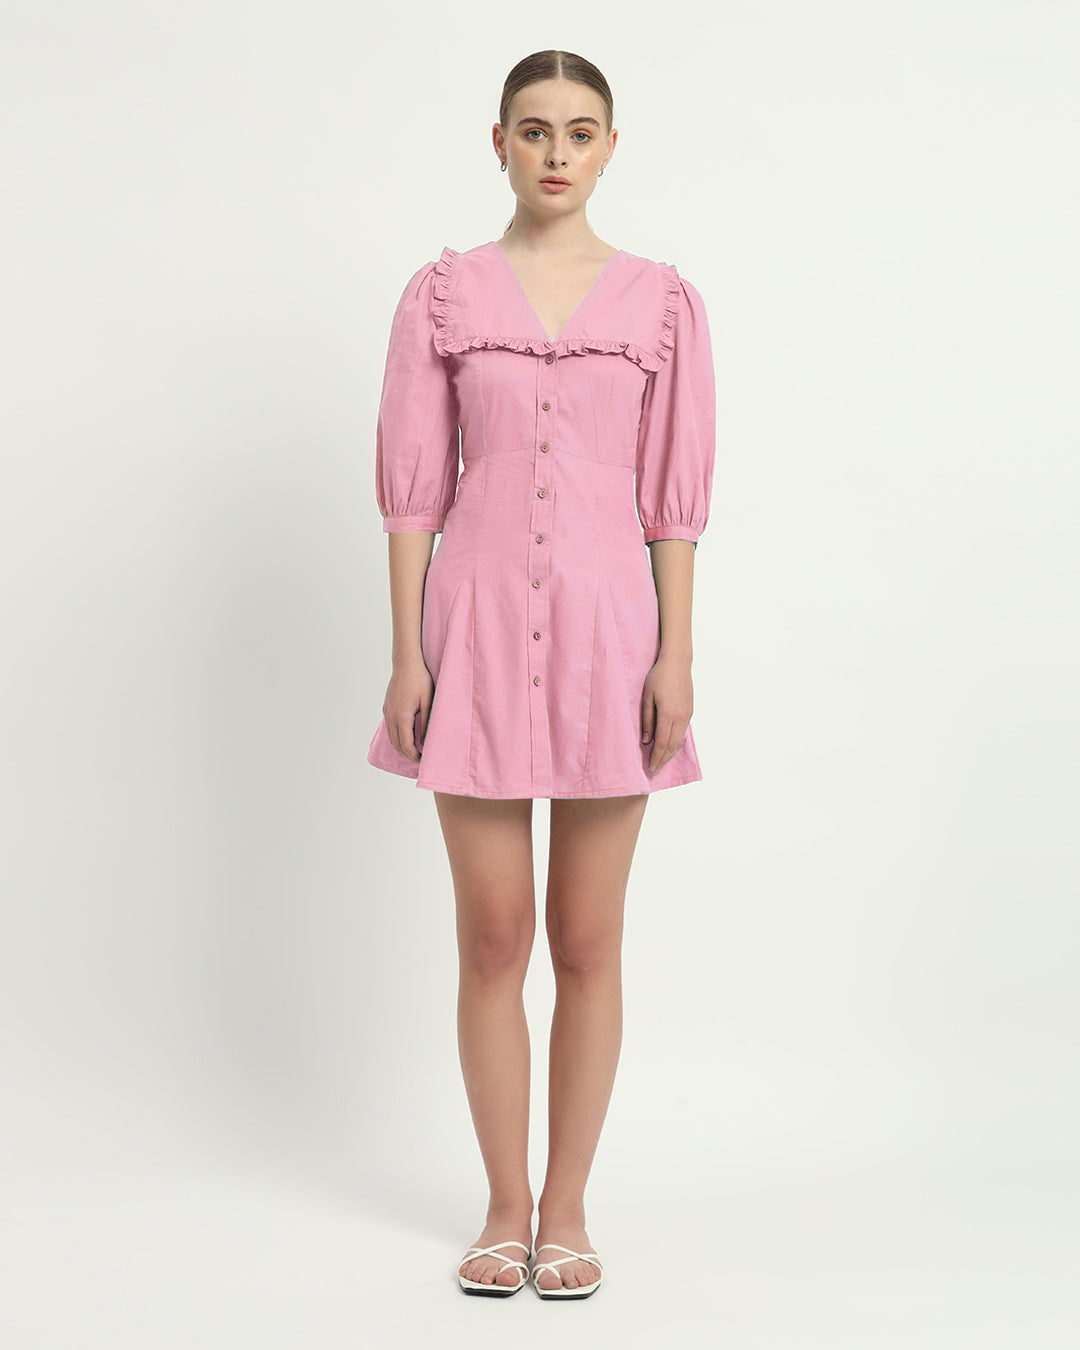 The Fondant Pink Isabela Cotton Dress